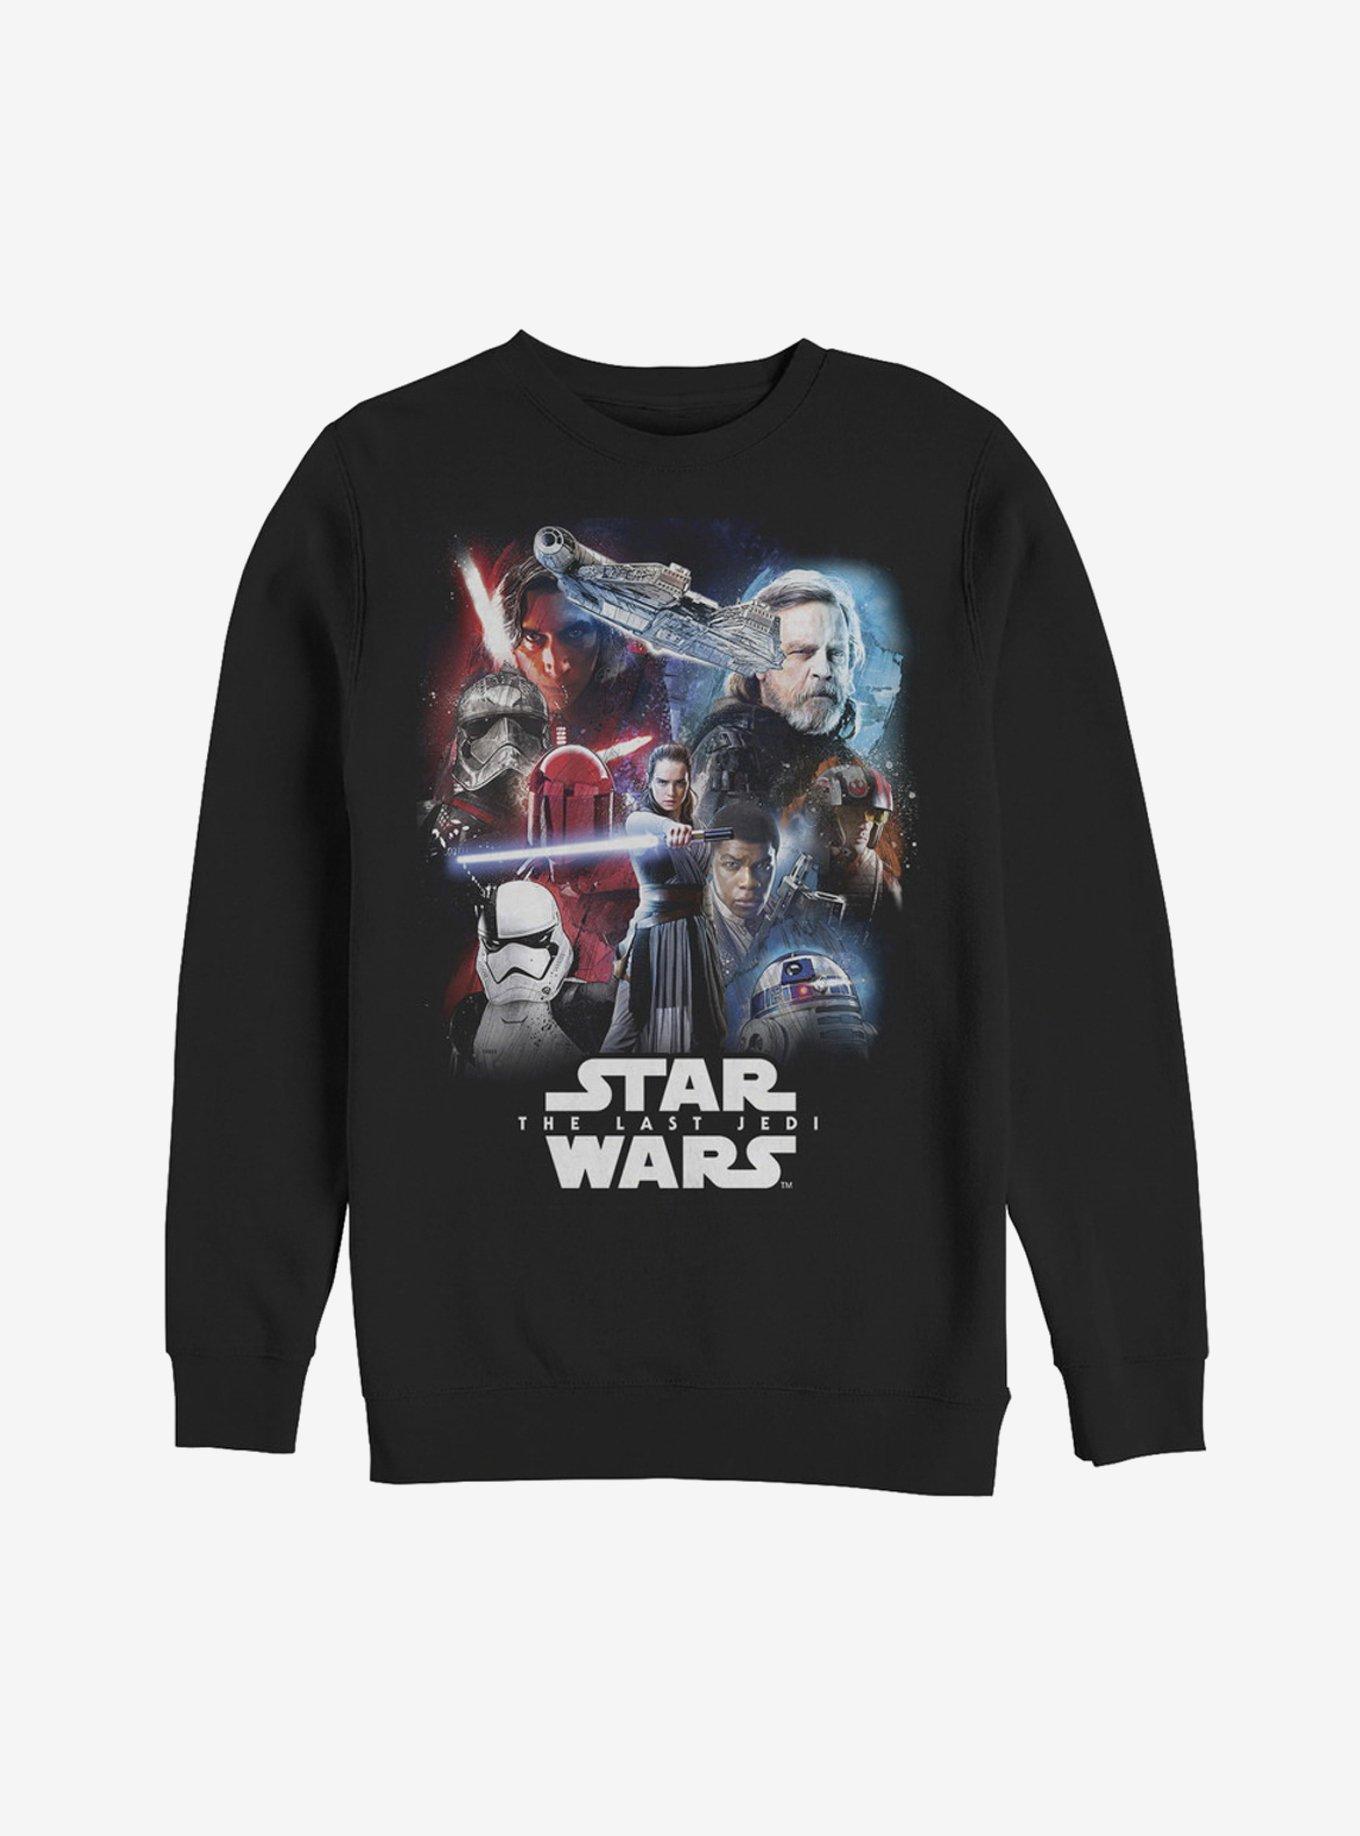 Star Wars: The Last Jedi Character Black Sweatshirt